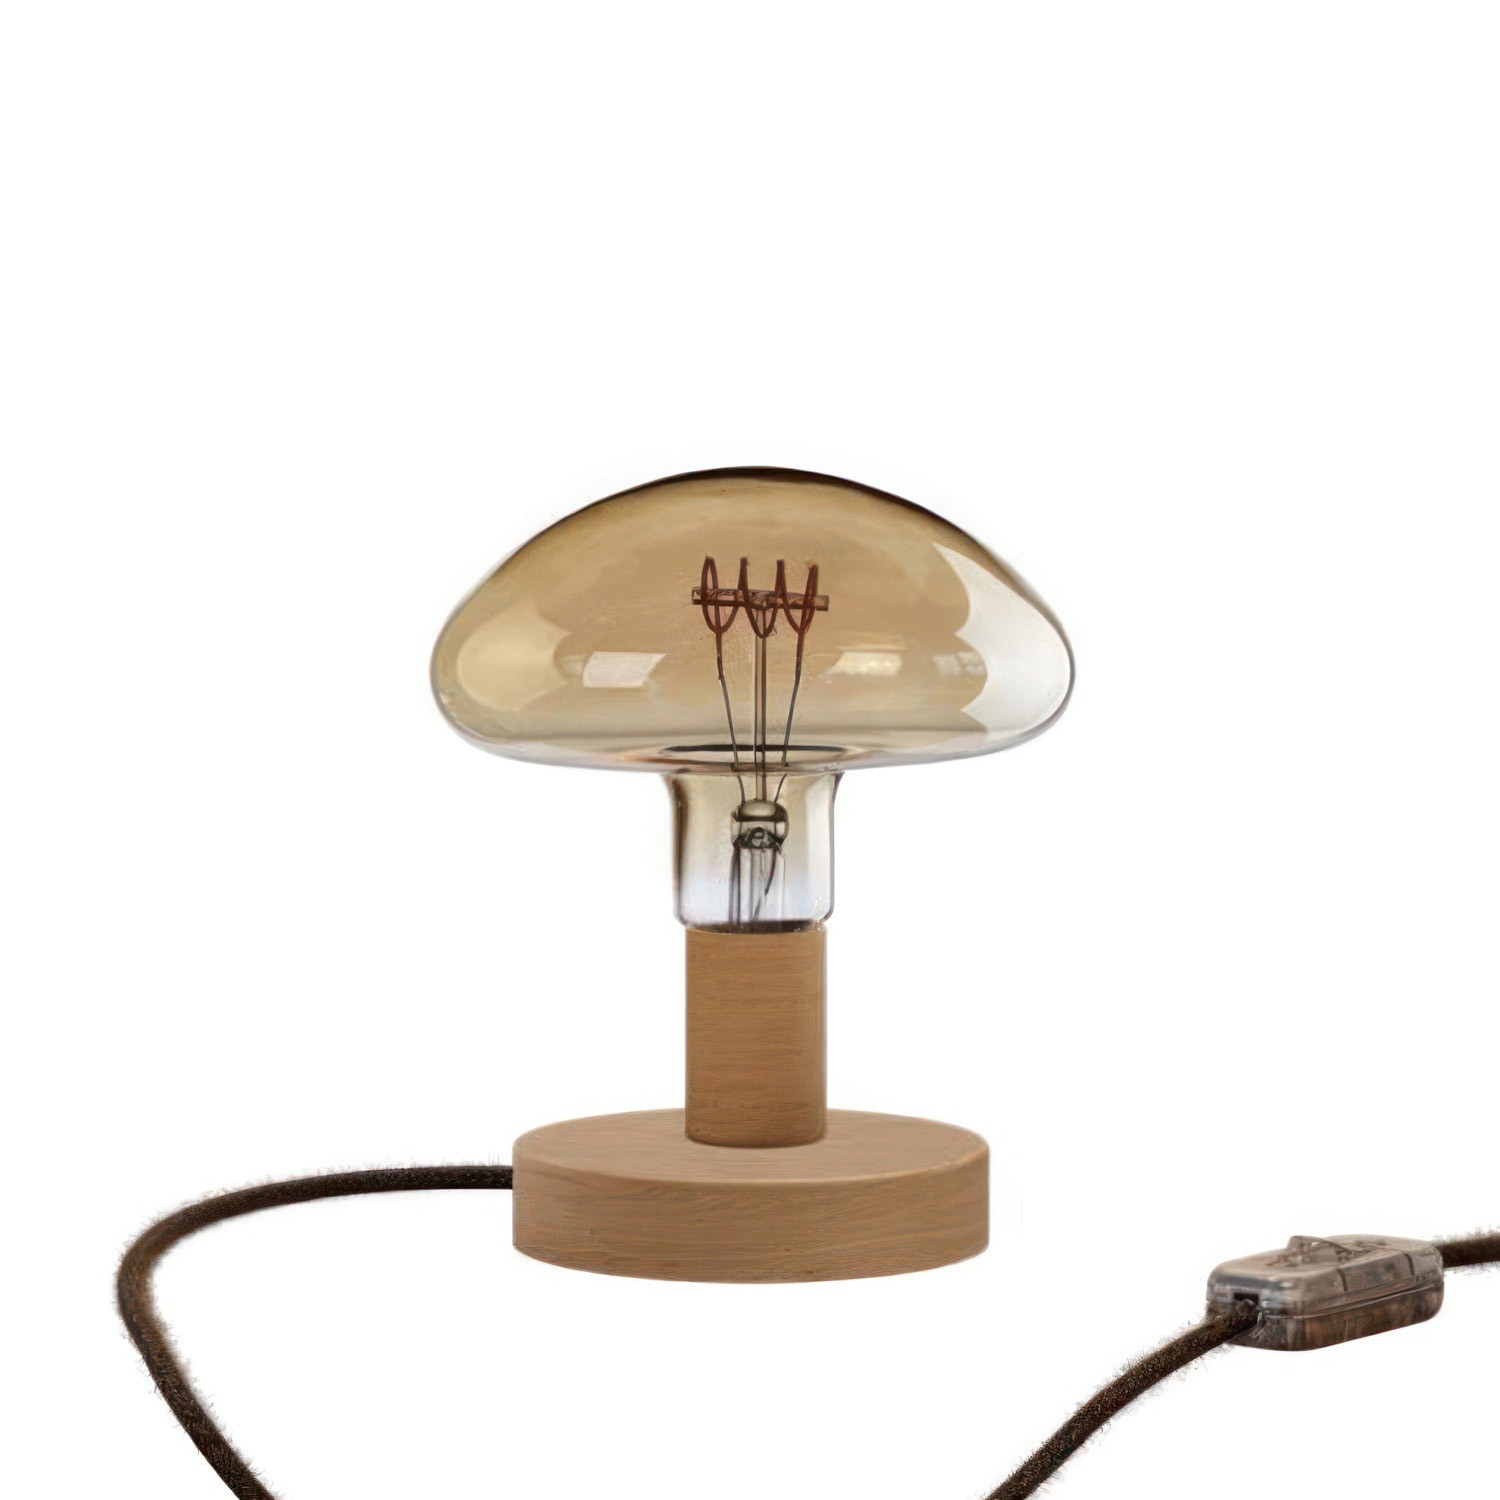 Posaluce Mushroom Drvena Stolna Lampa